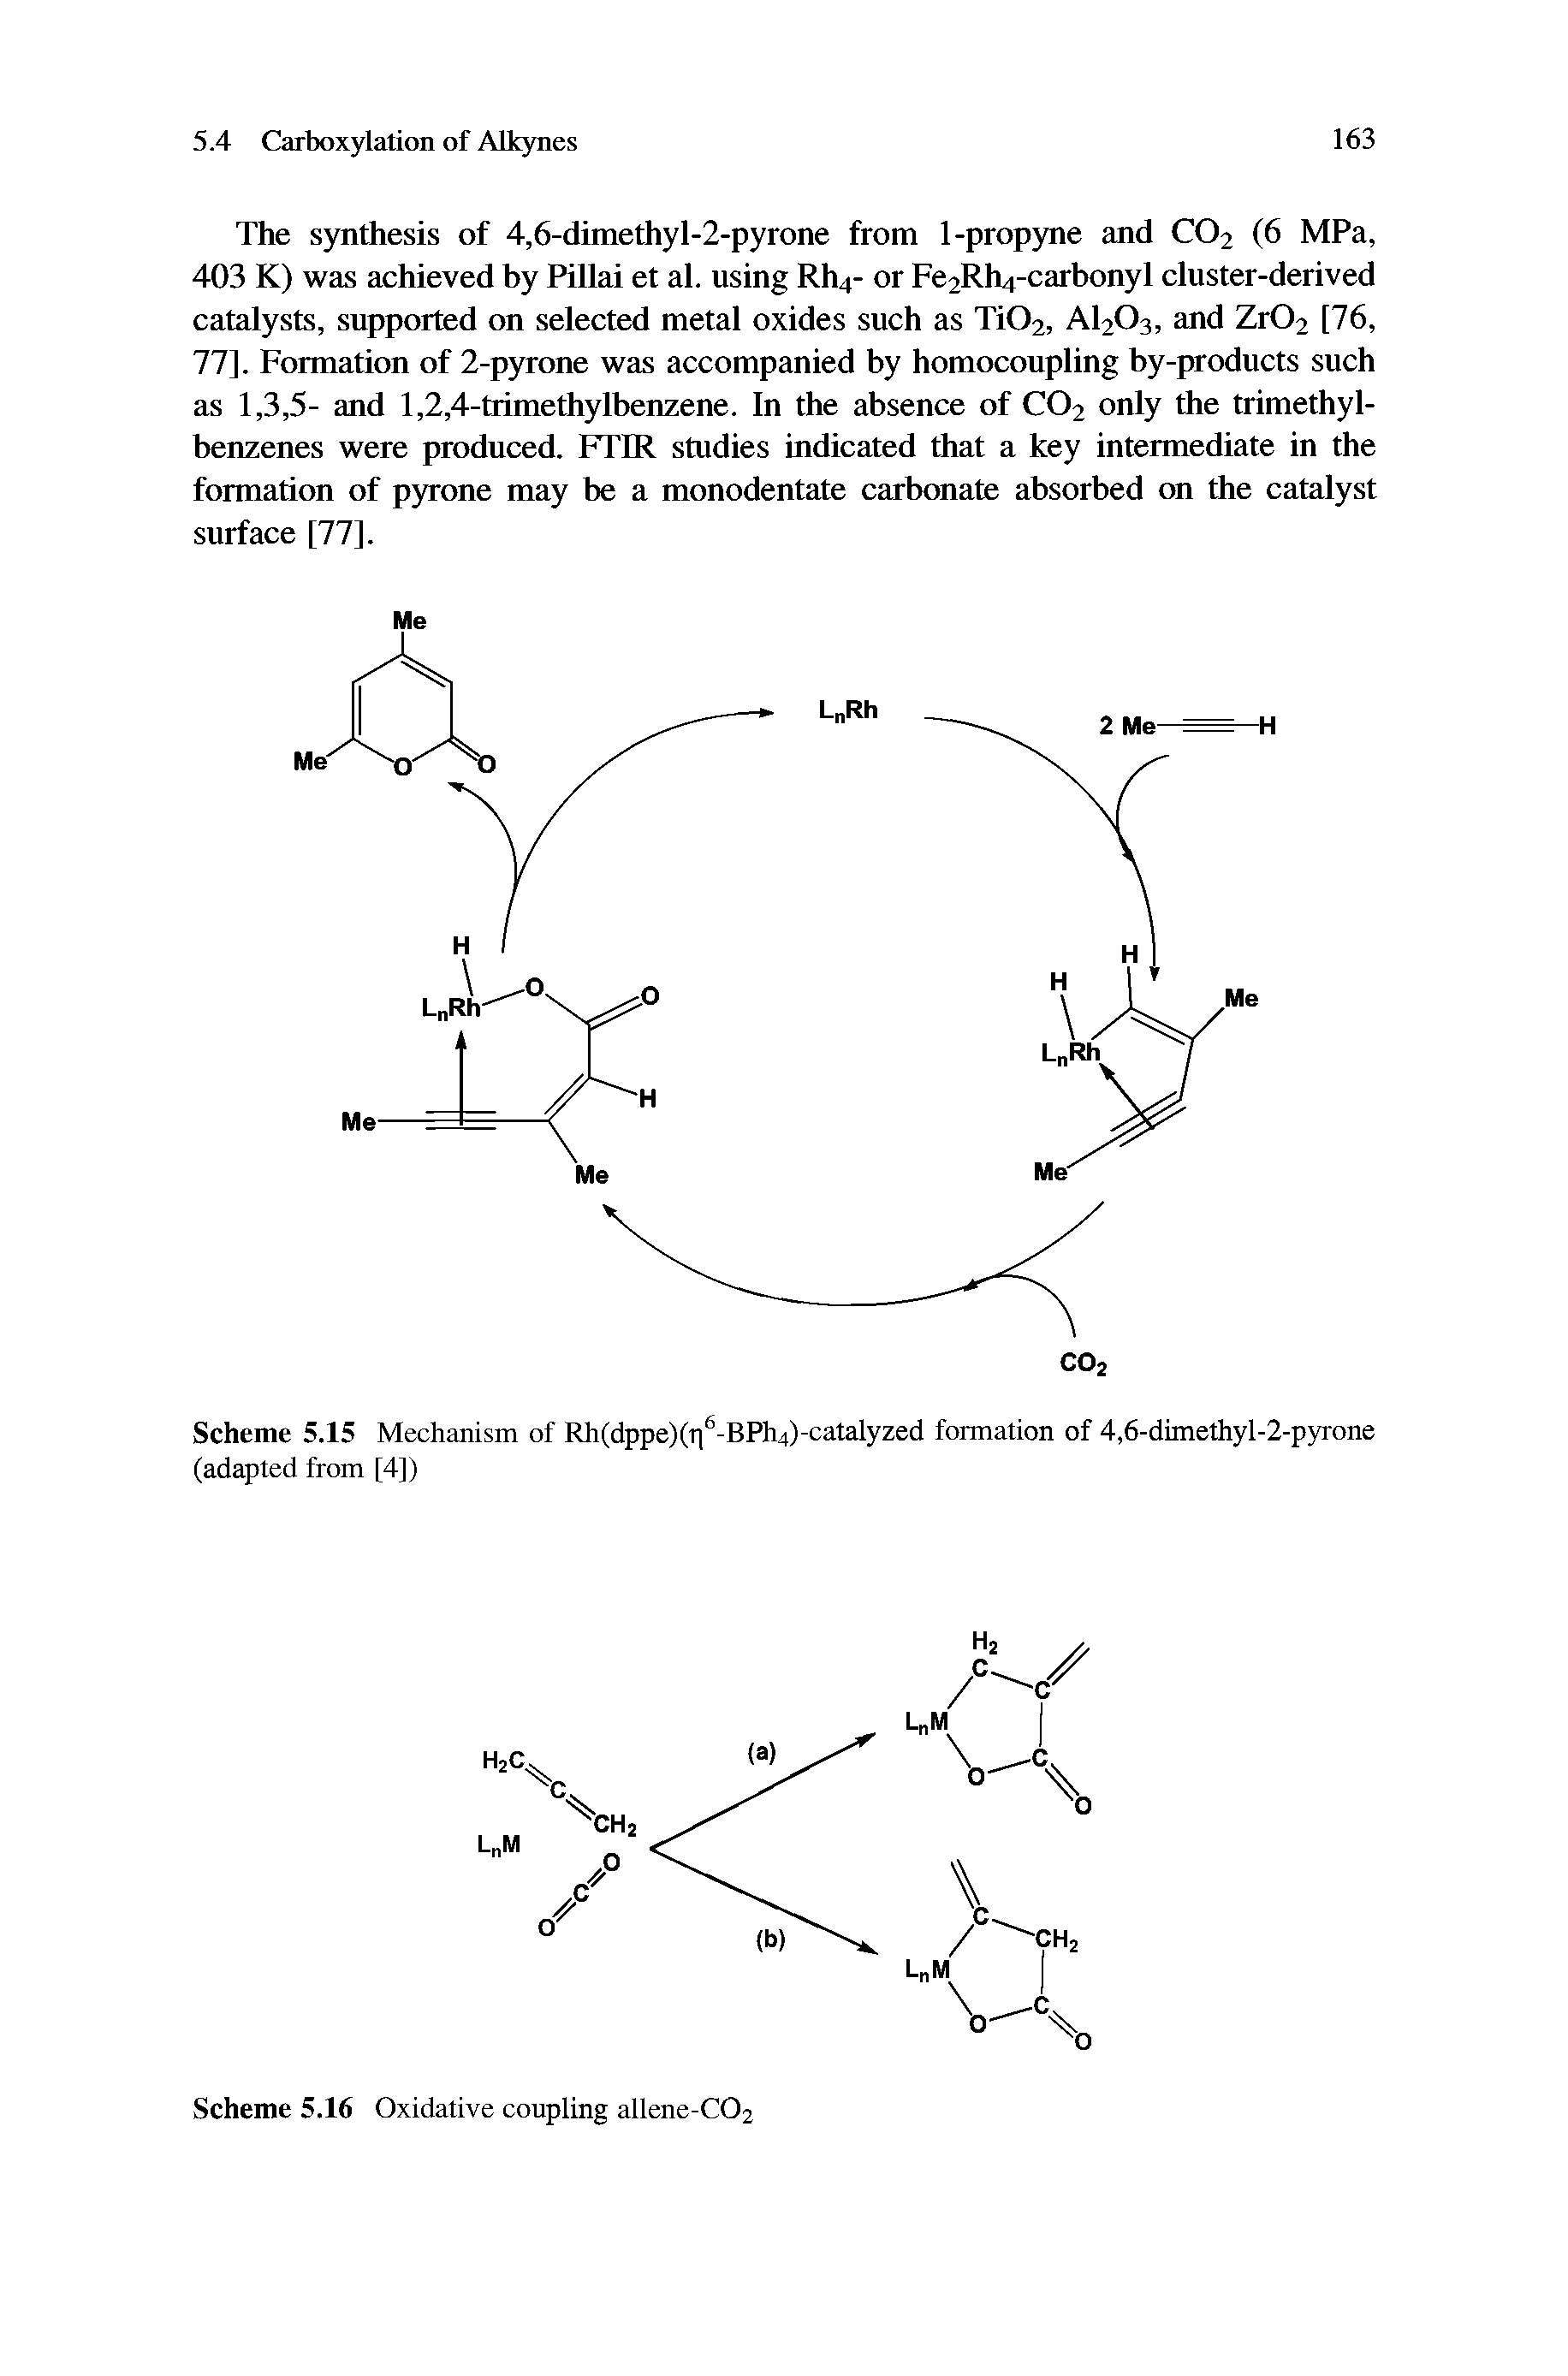 Scheme 5.15 Mechanism of Rh(dppe)(ti -BPh4)-catalyzed formation of 4,6-dimethyl-2-pyrone...